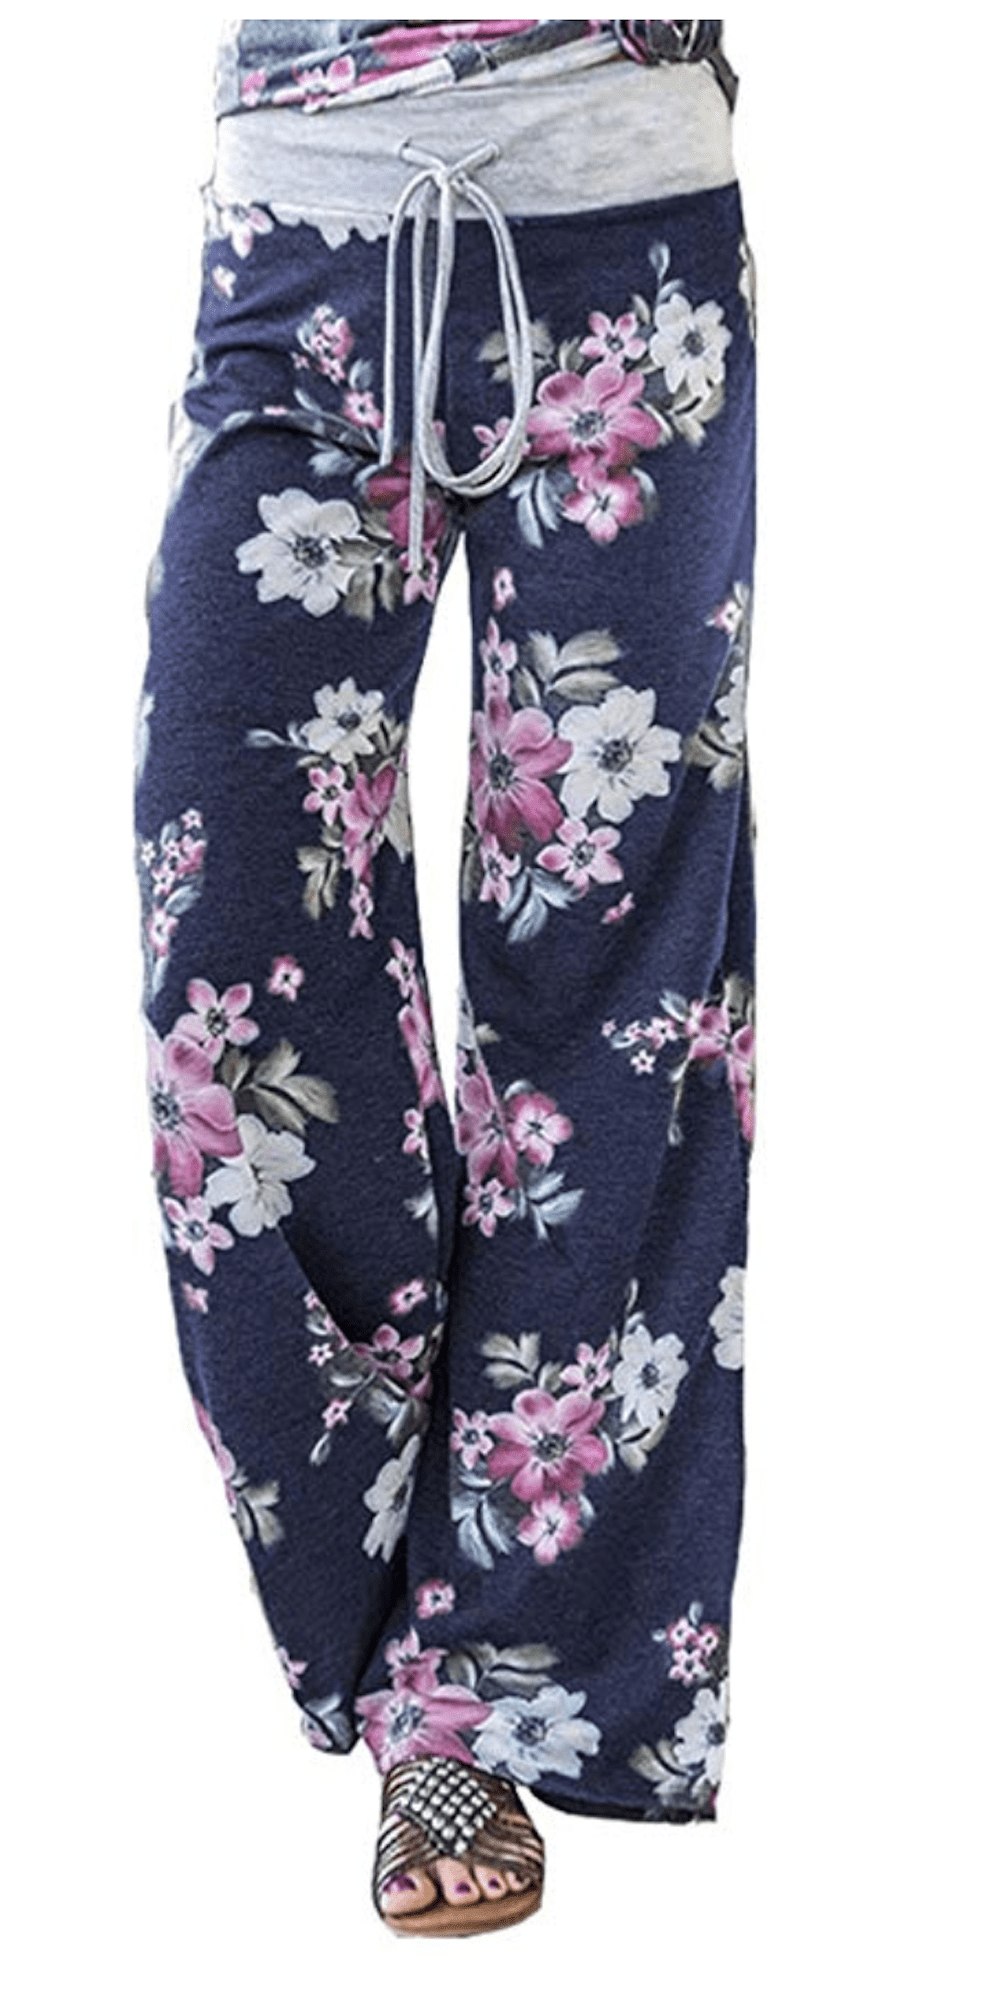 Floral Wide Leg Lounge Pants Women Women’s Casual Pajama Lounge Pants Bottoms Drawstring Sweatpants Workout Track Pants Loungewear